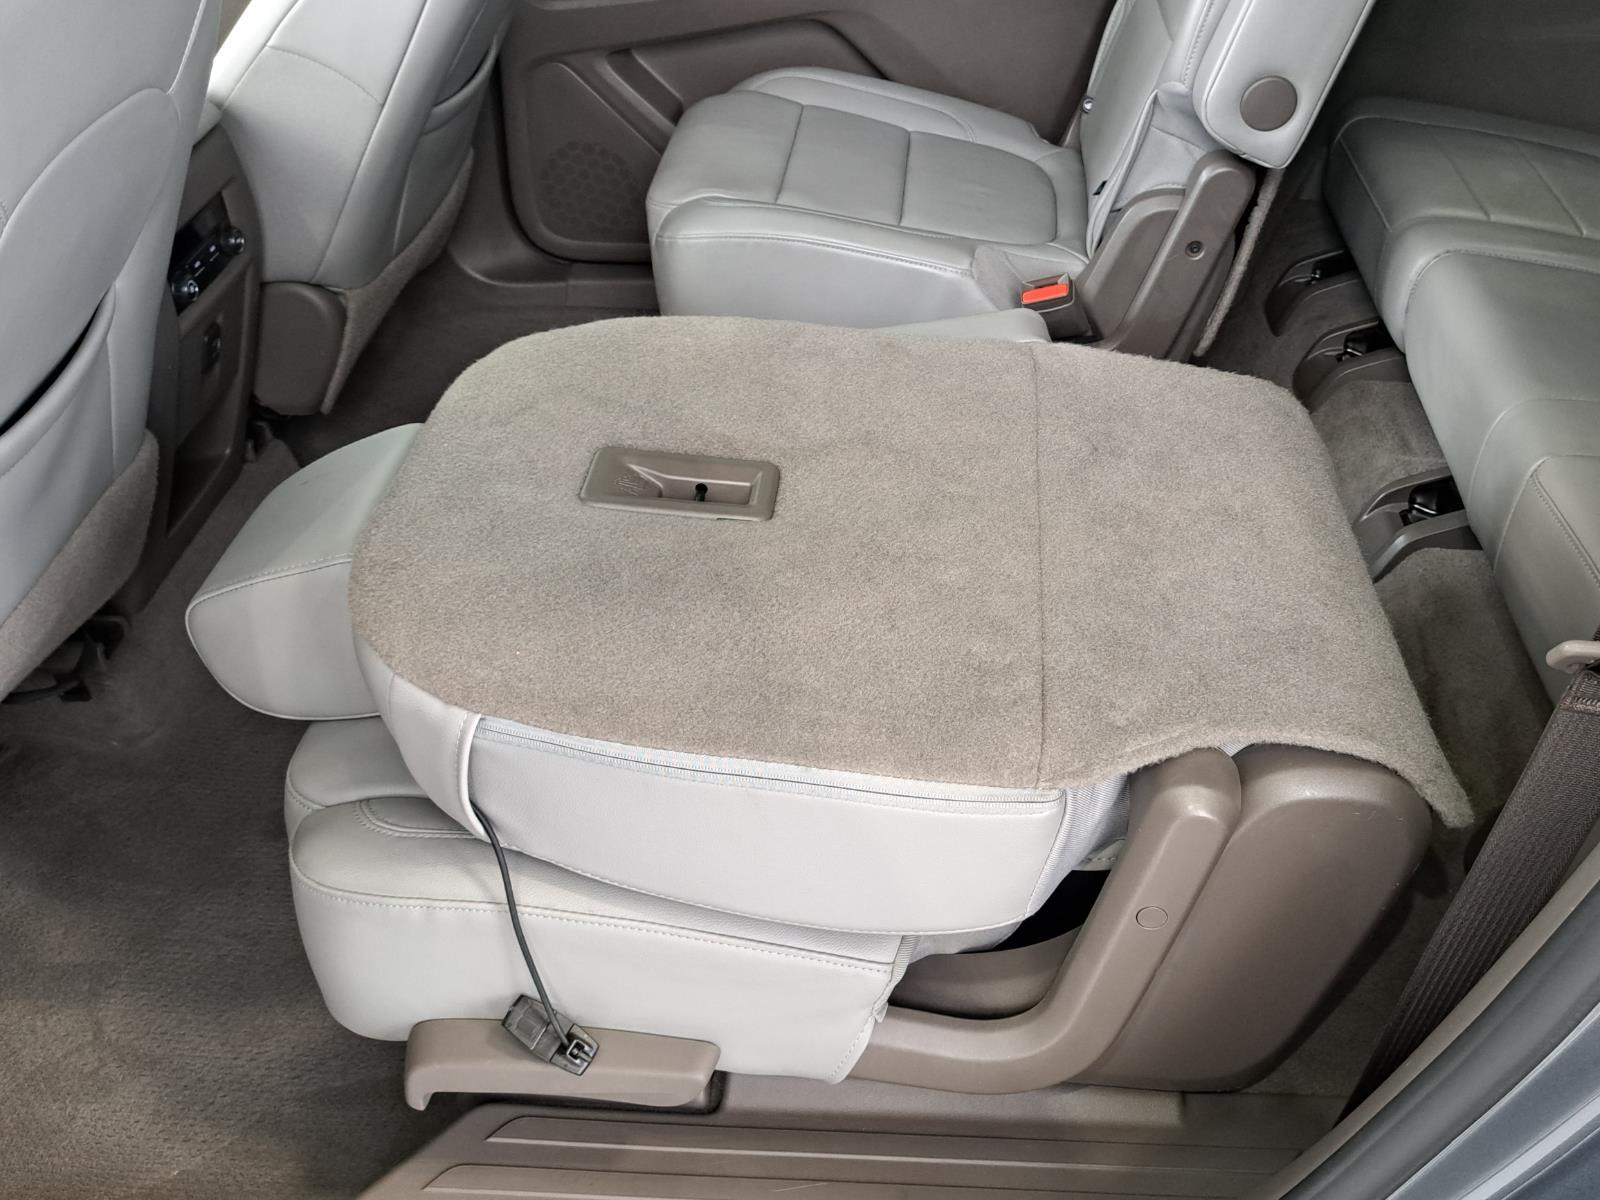 2019 Chevrolet Traverse LT Leather SUV Front Wheel Drive thumbnail 67